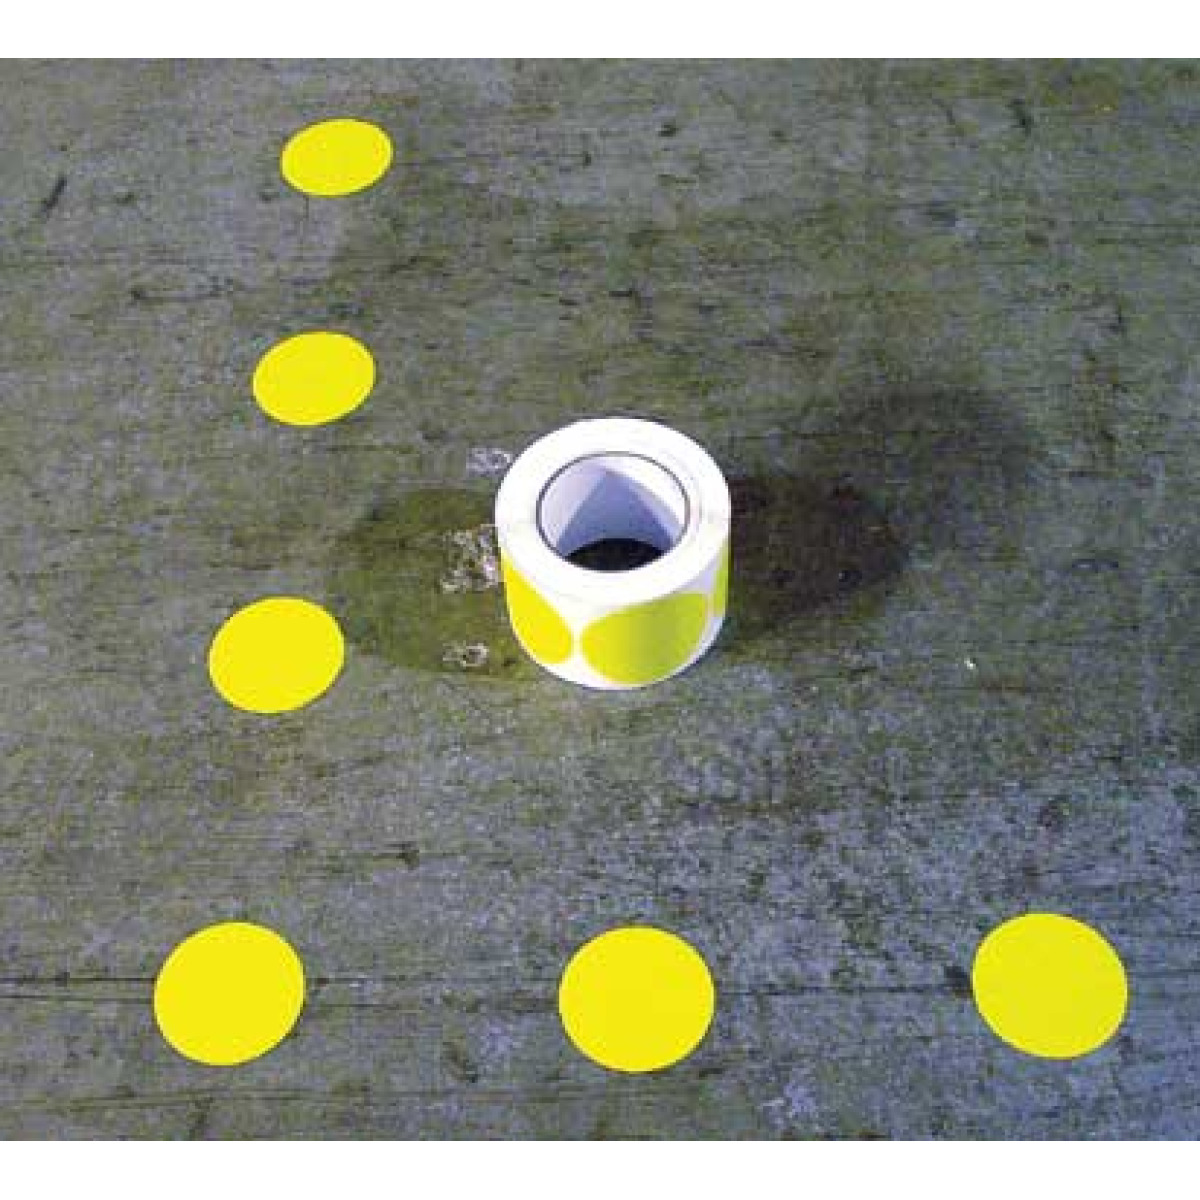 Warehouse Floor marking color dot symbol adhesives